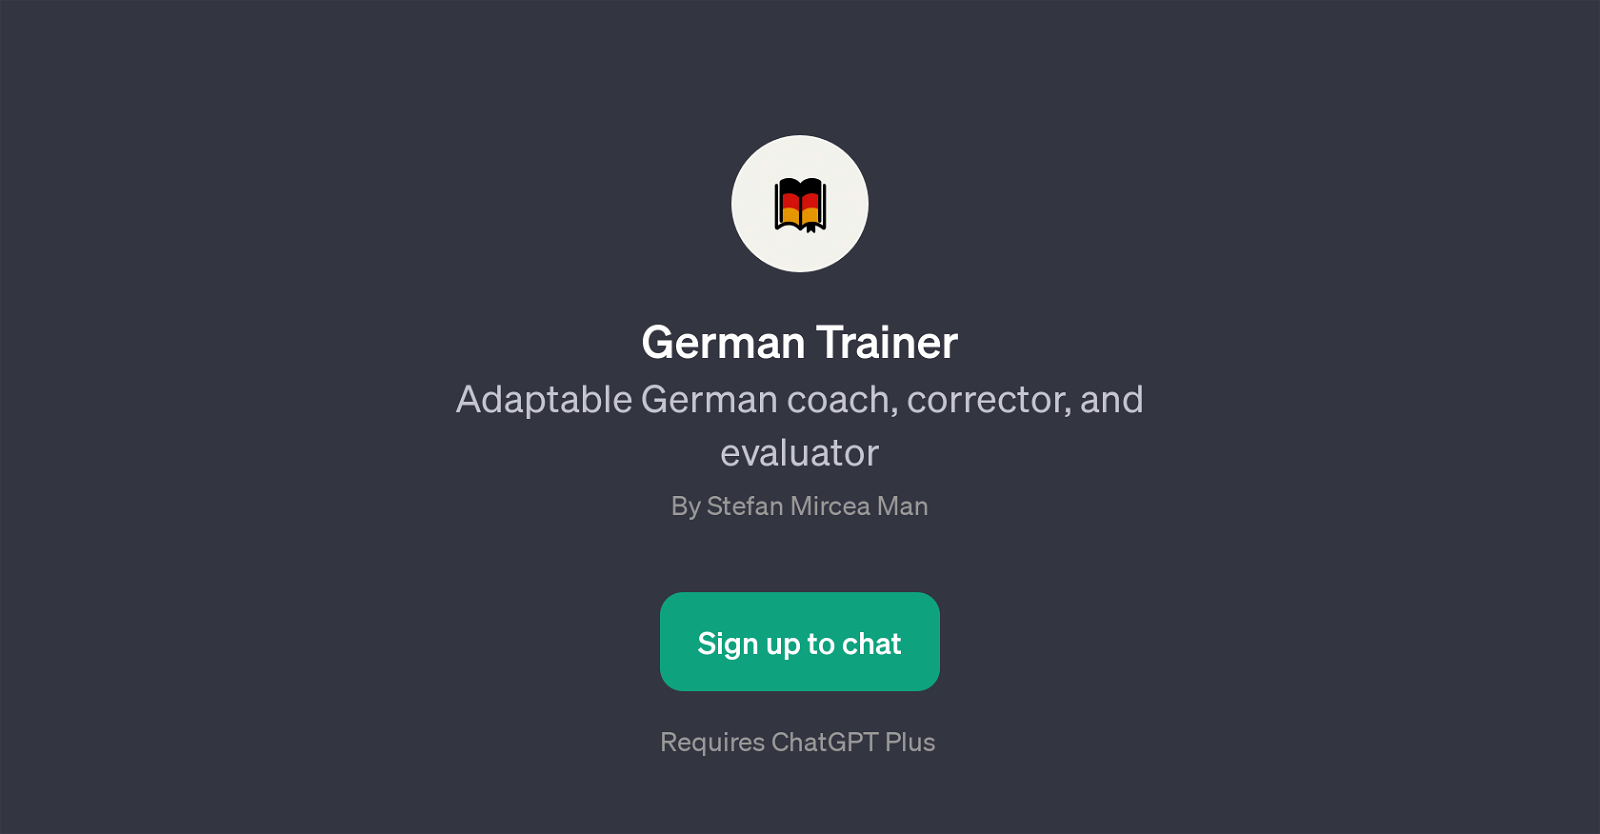 German Trainer website